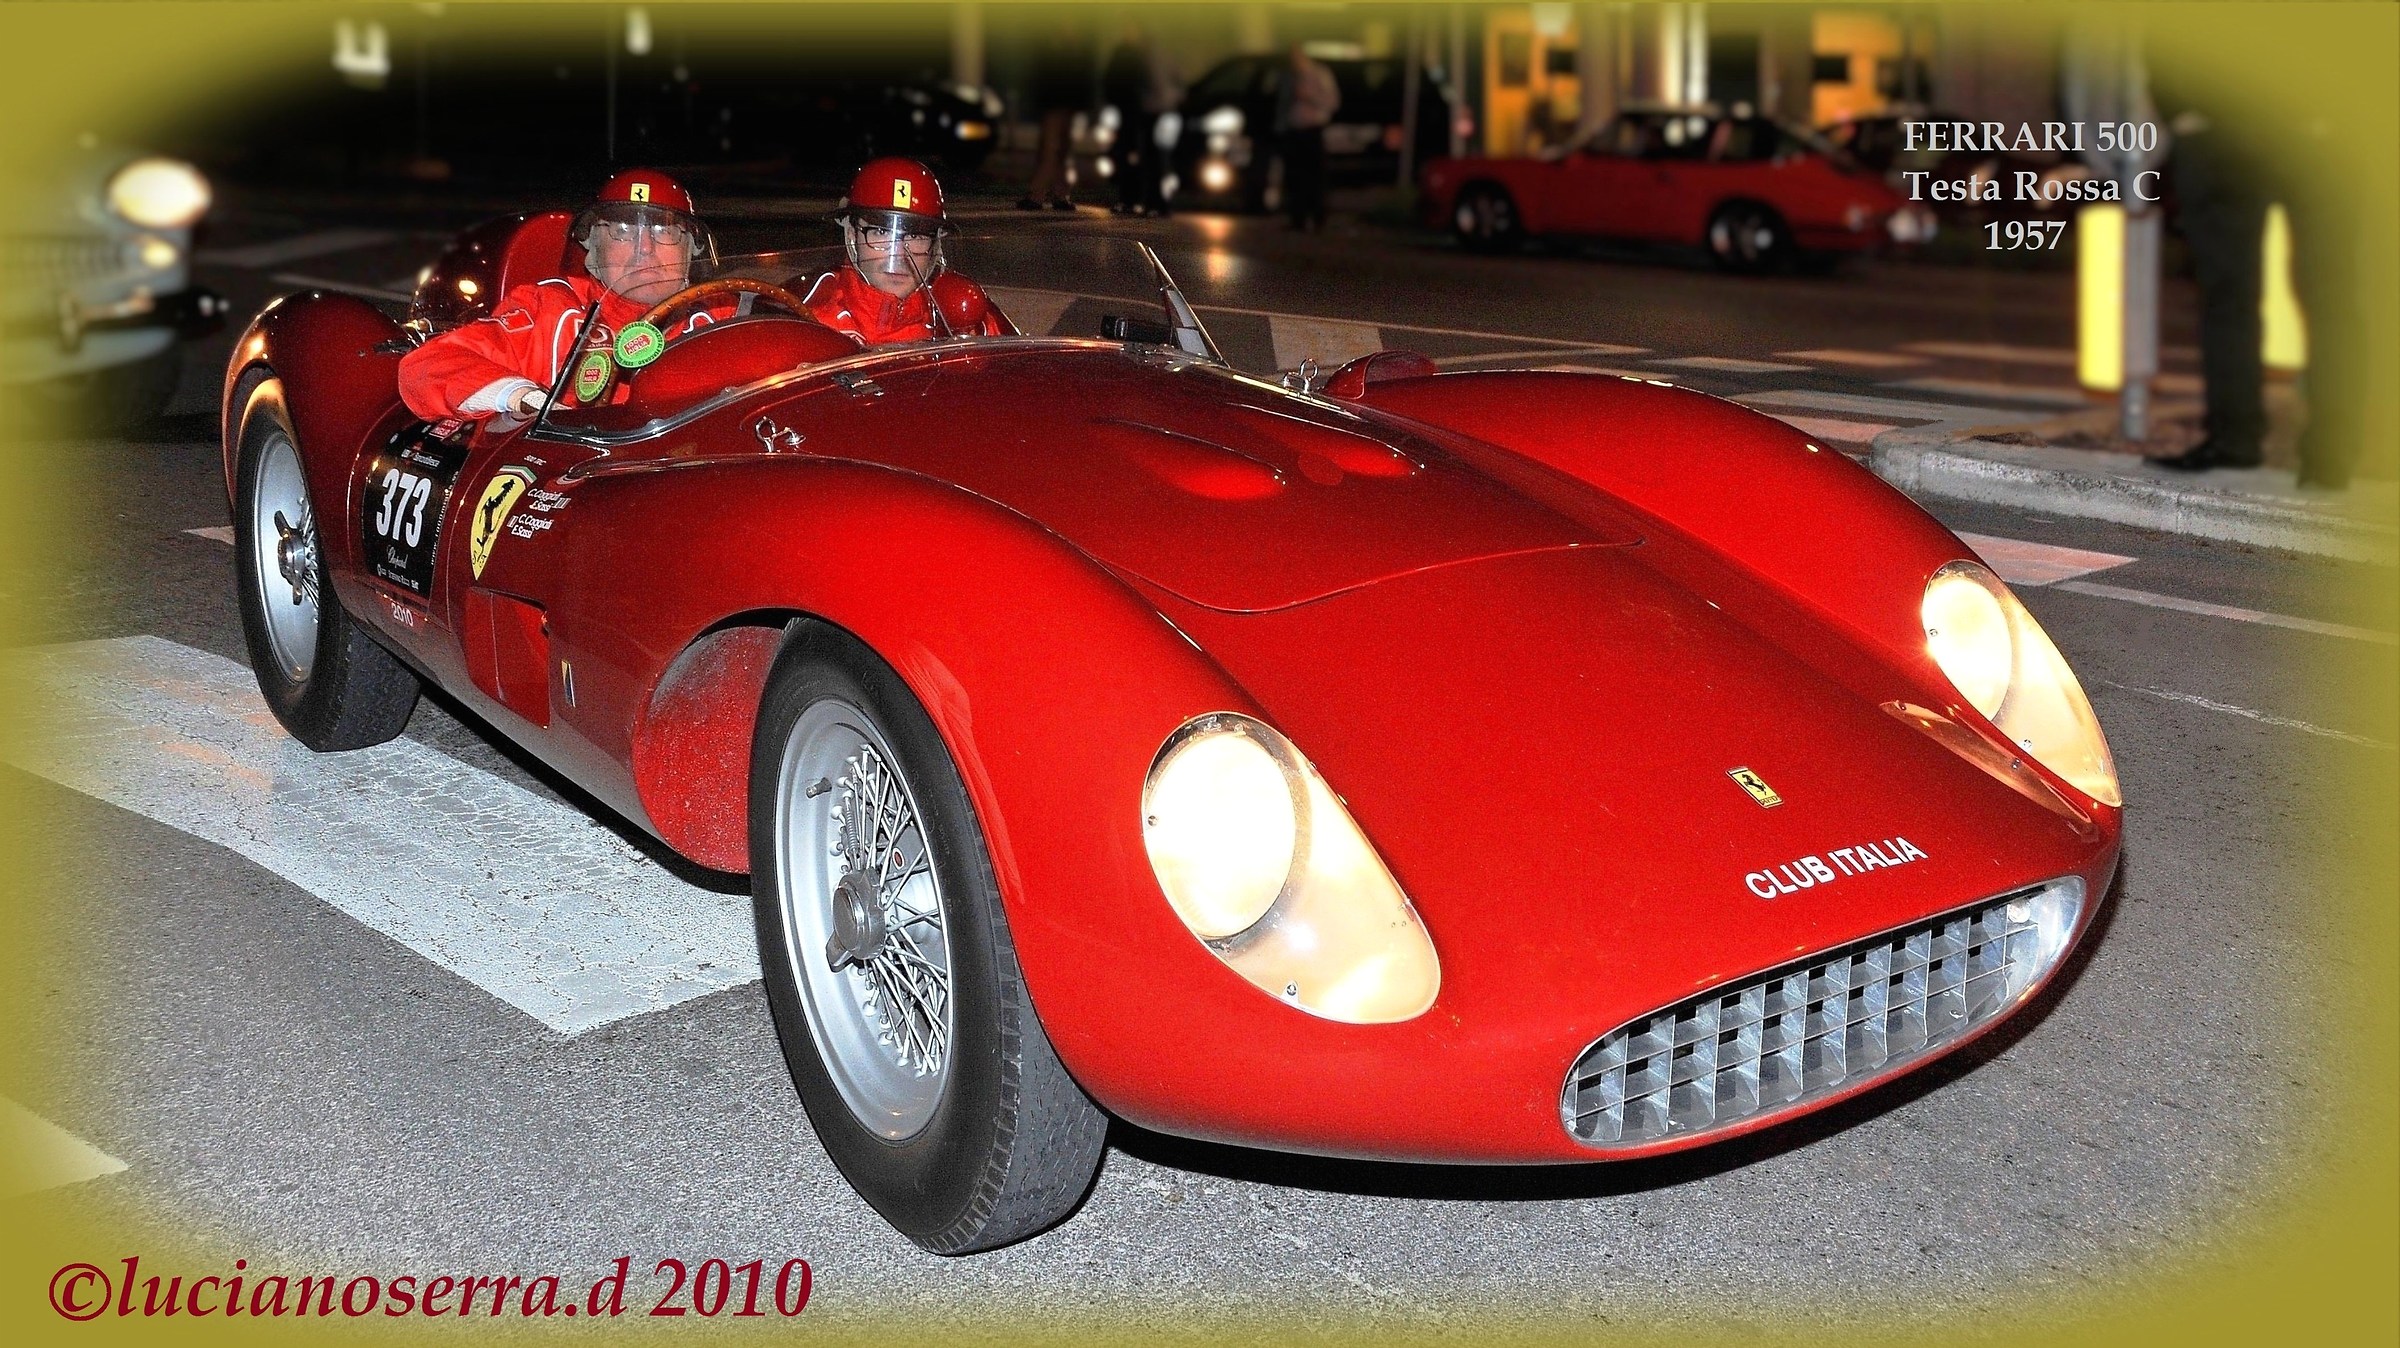 Ferrari 500 red head "C"-1957...